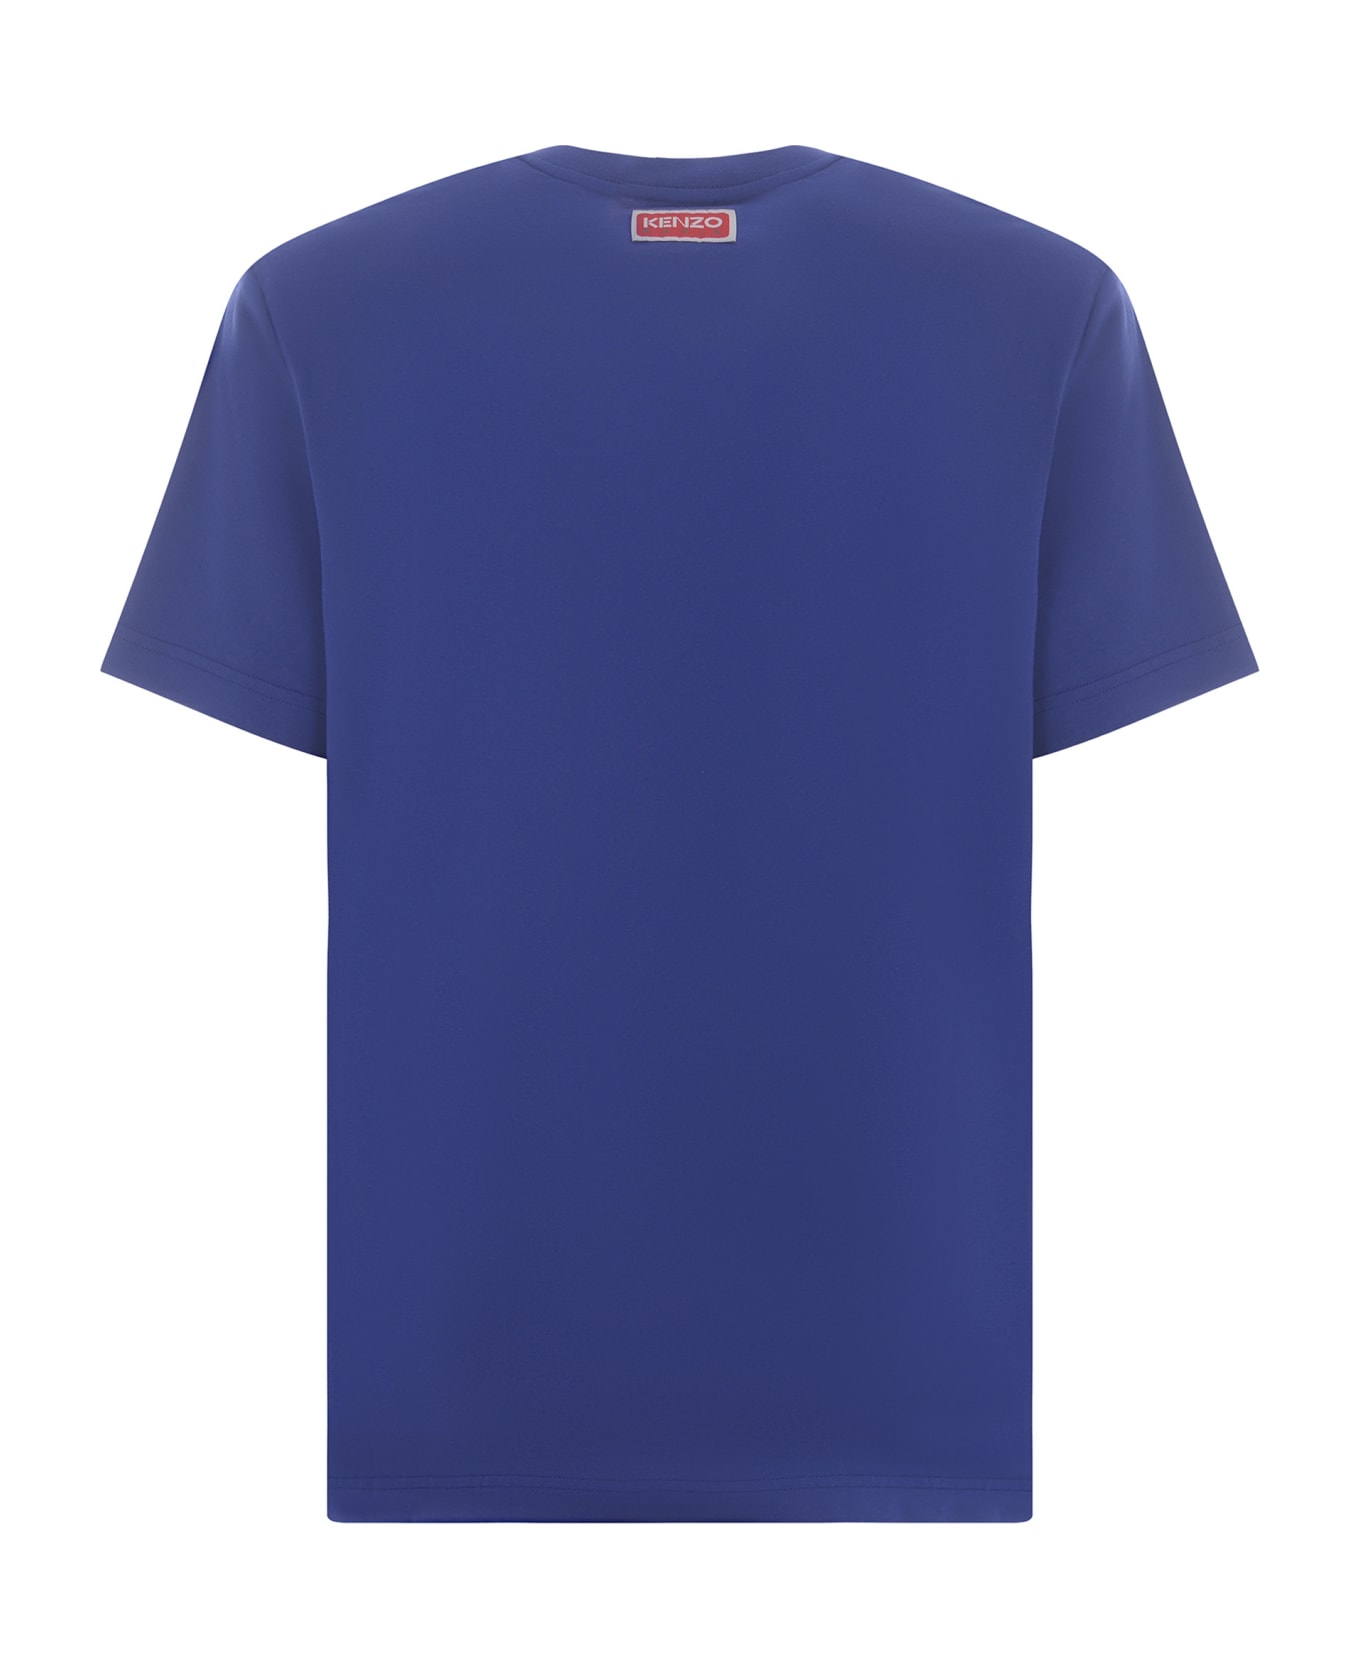 Kenzo Tiger Varsity Classic T-shirt - BLUE